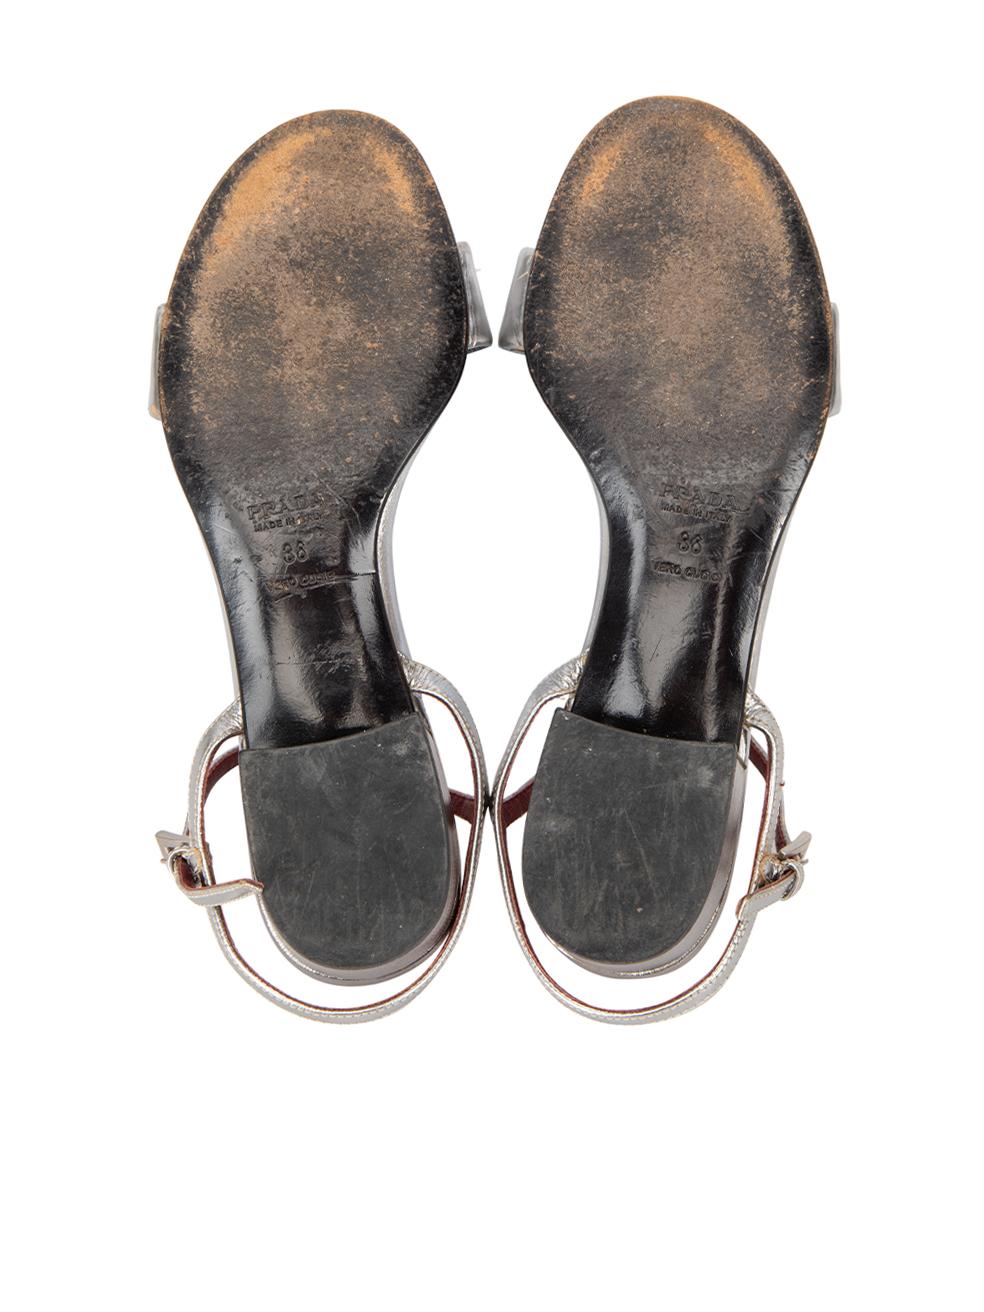 Prada Women's Silver Leather Kitten Heel Sandals 5